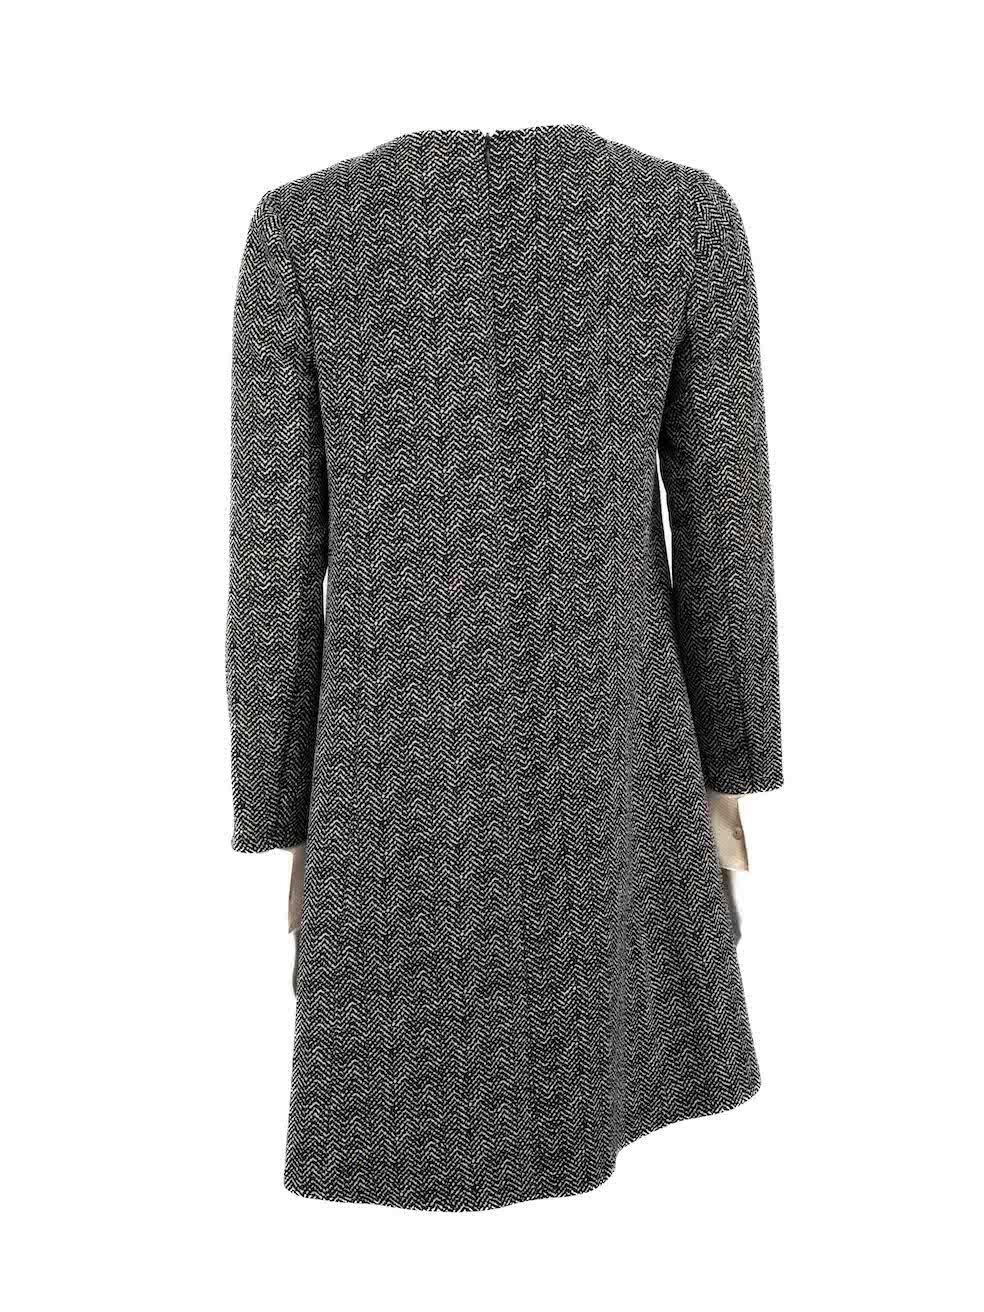 Essentiel Antwerp Black Zigzag Print Dress Size S In Excellent Condition For Sale In London, GB